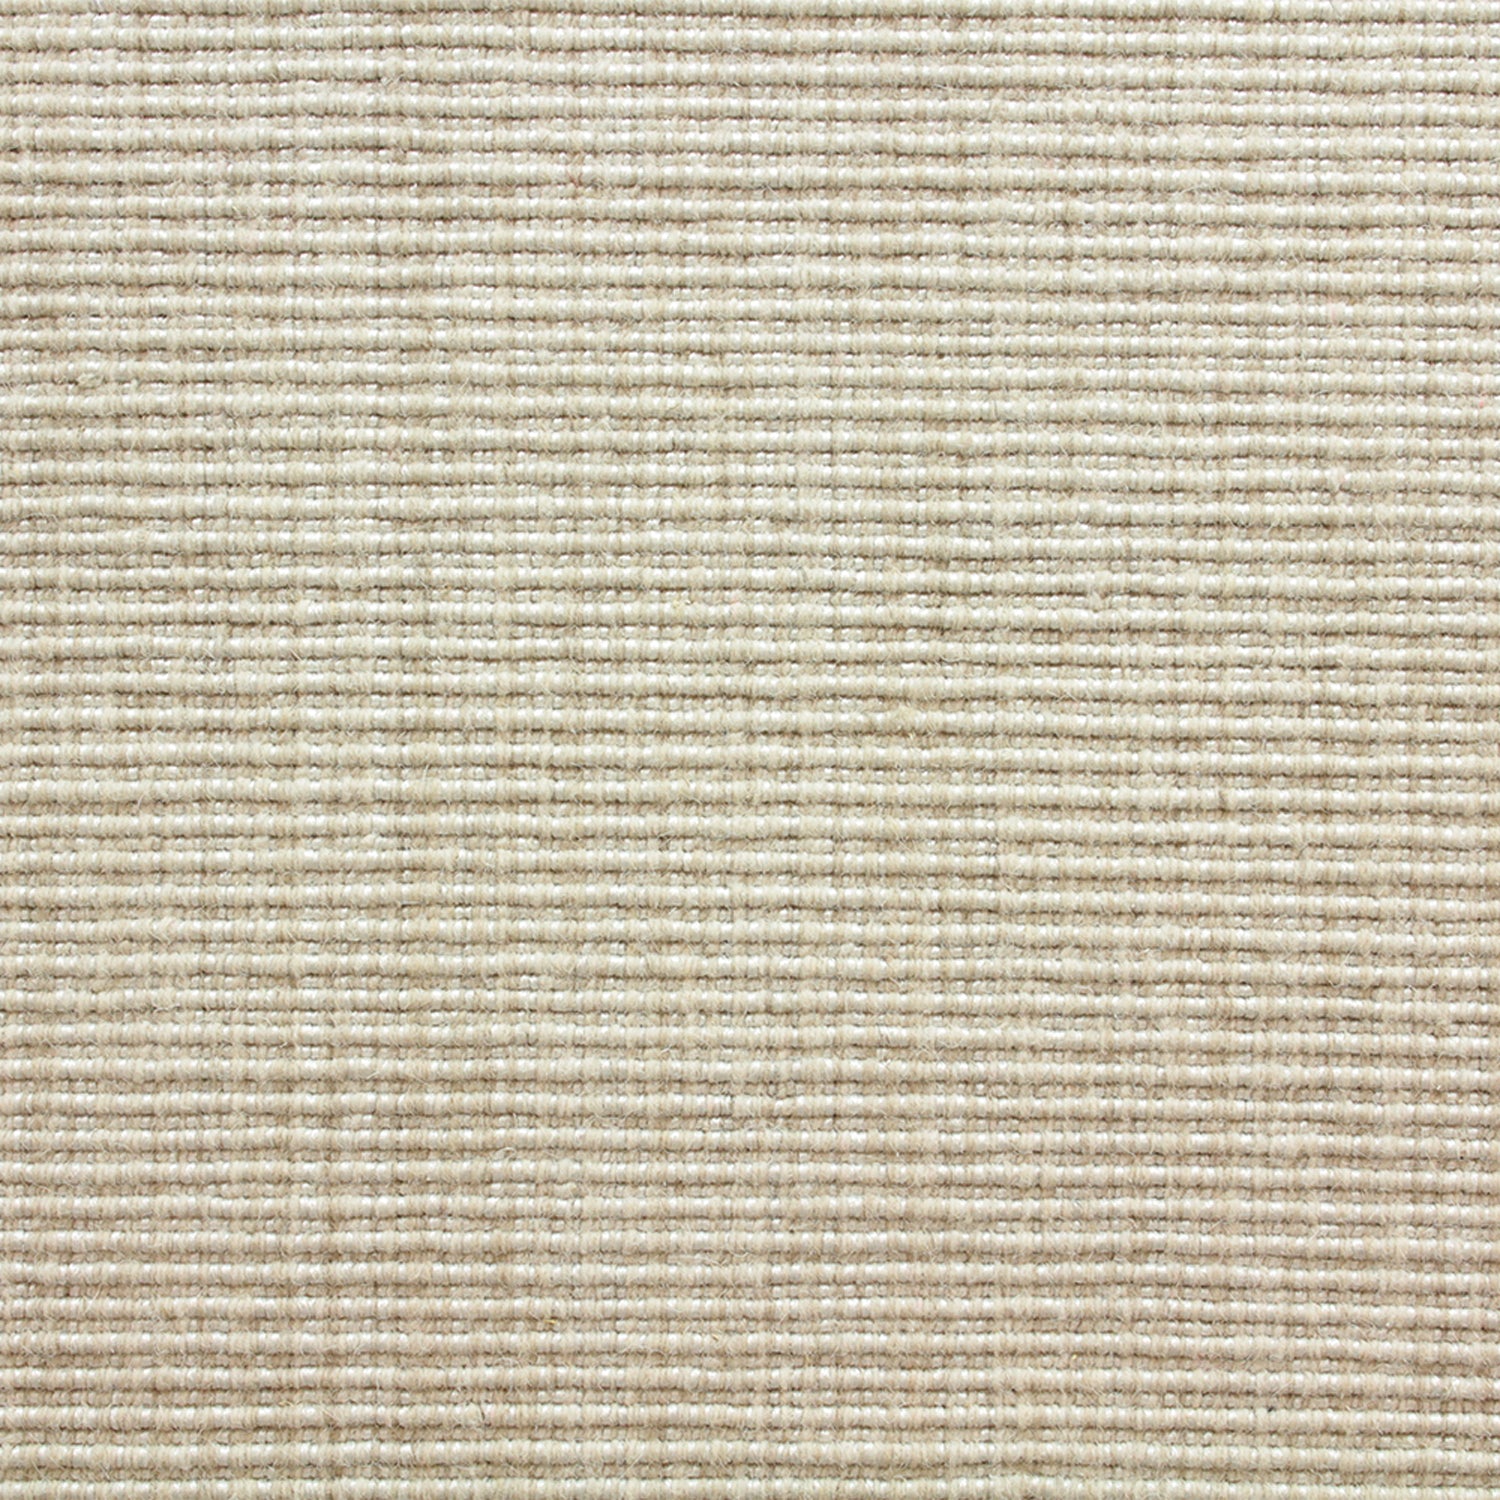 Wool-blend broadloom carpet swatch in a ribbed weave in cream.